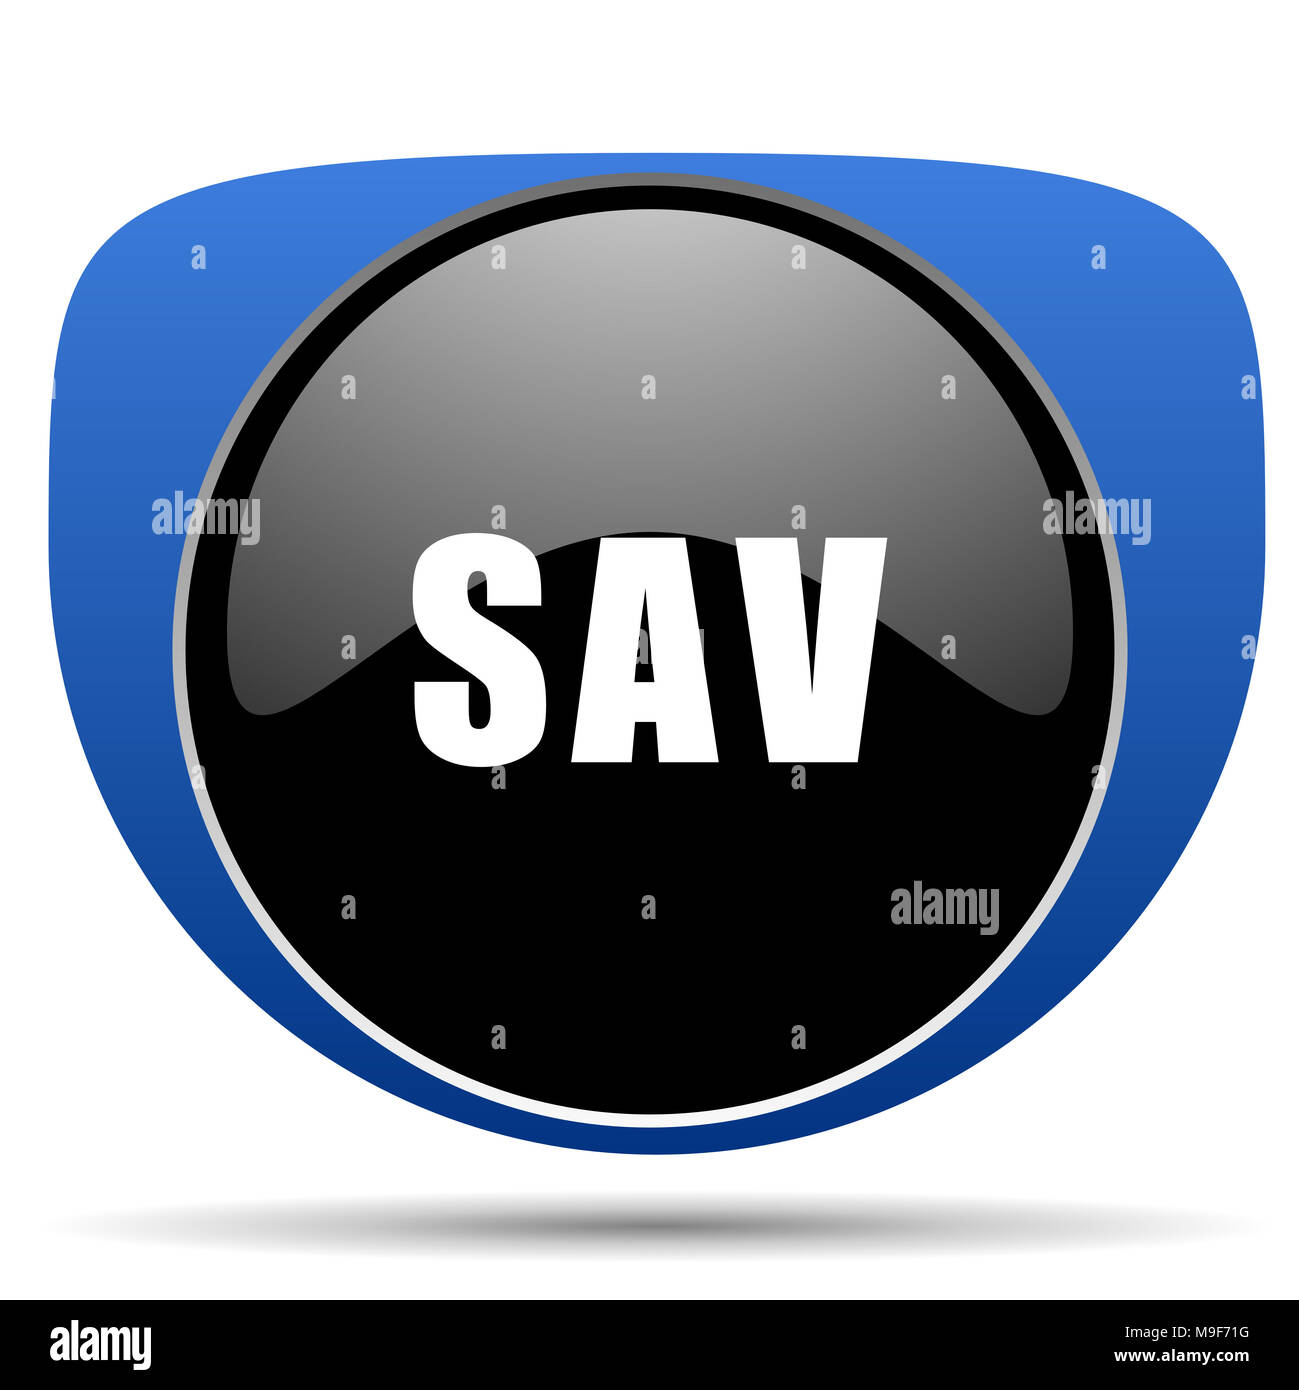 Sav web icon Stock Photo